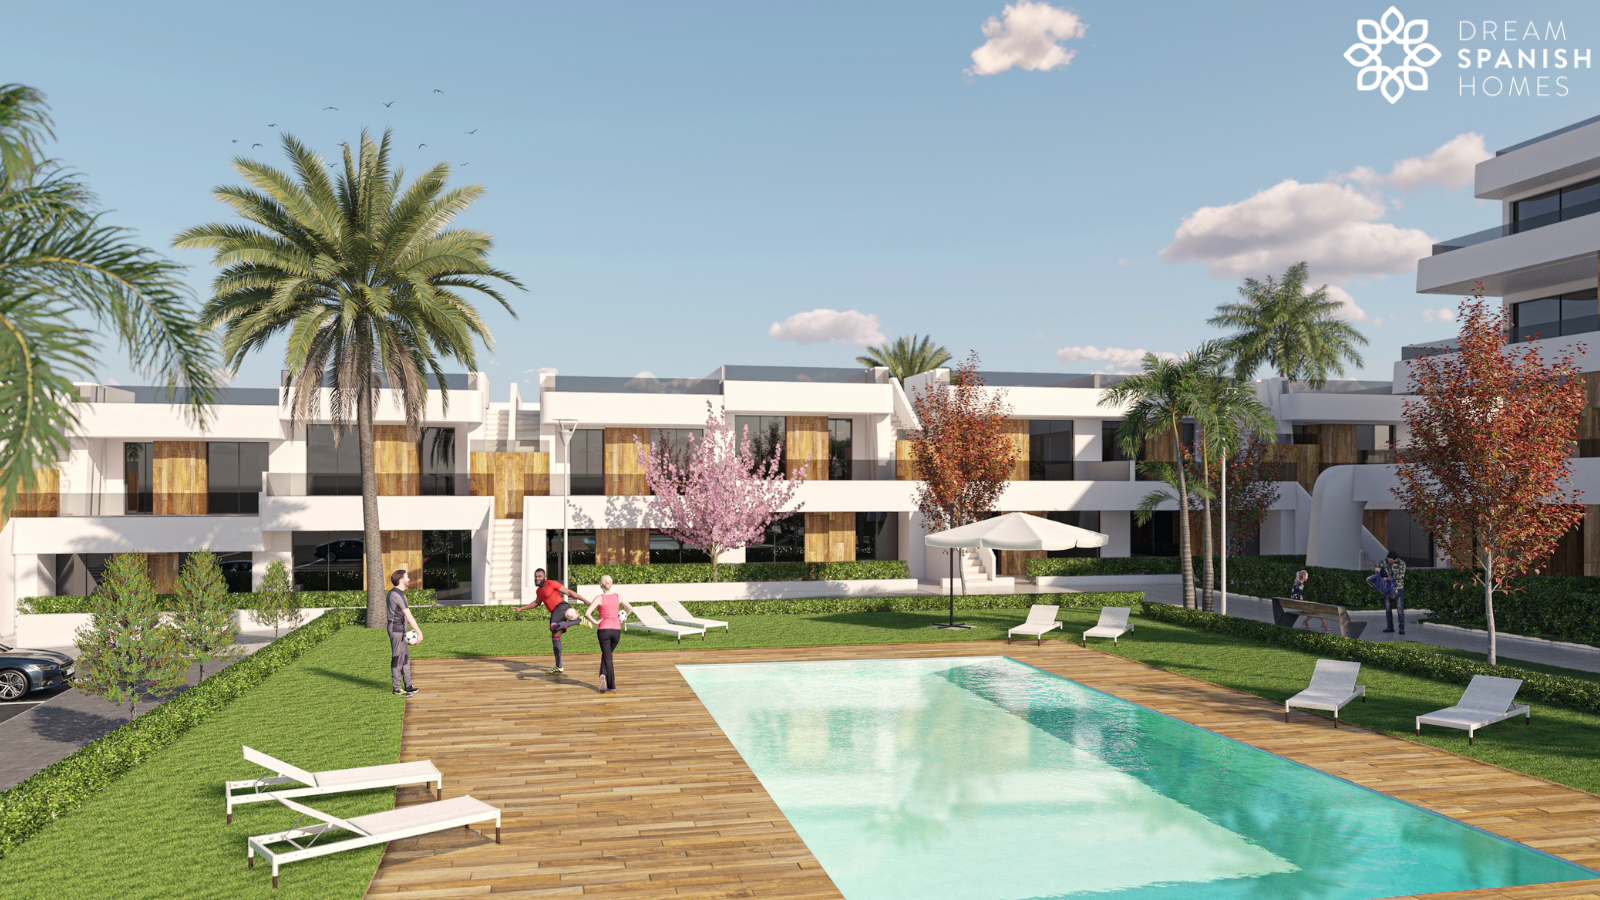 Residencial Gaudi, 18 Apartments  2 or 3 Bedroom, Alhama Nature Resort